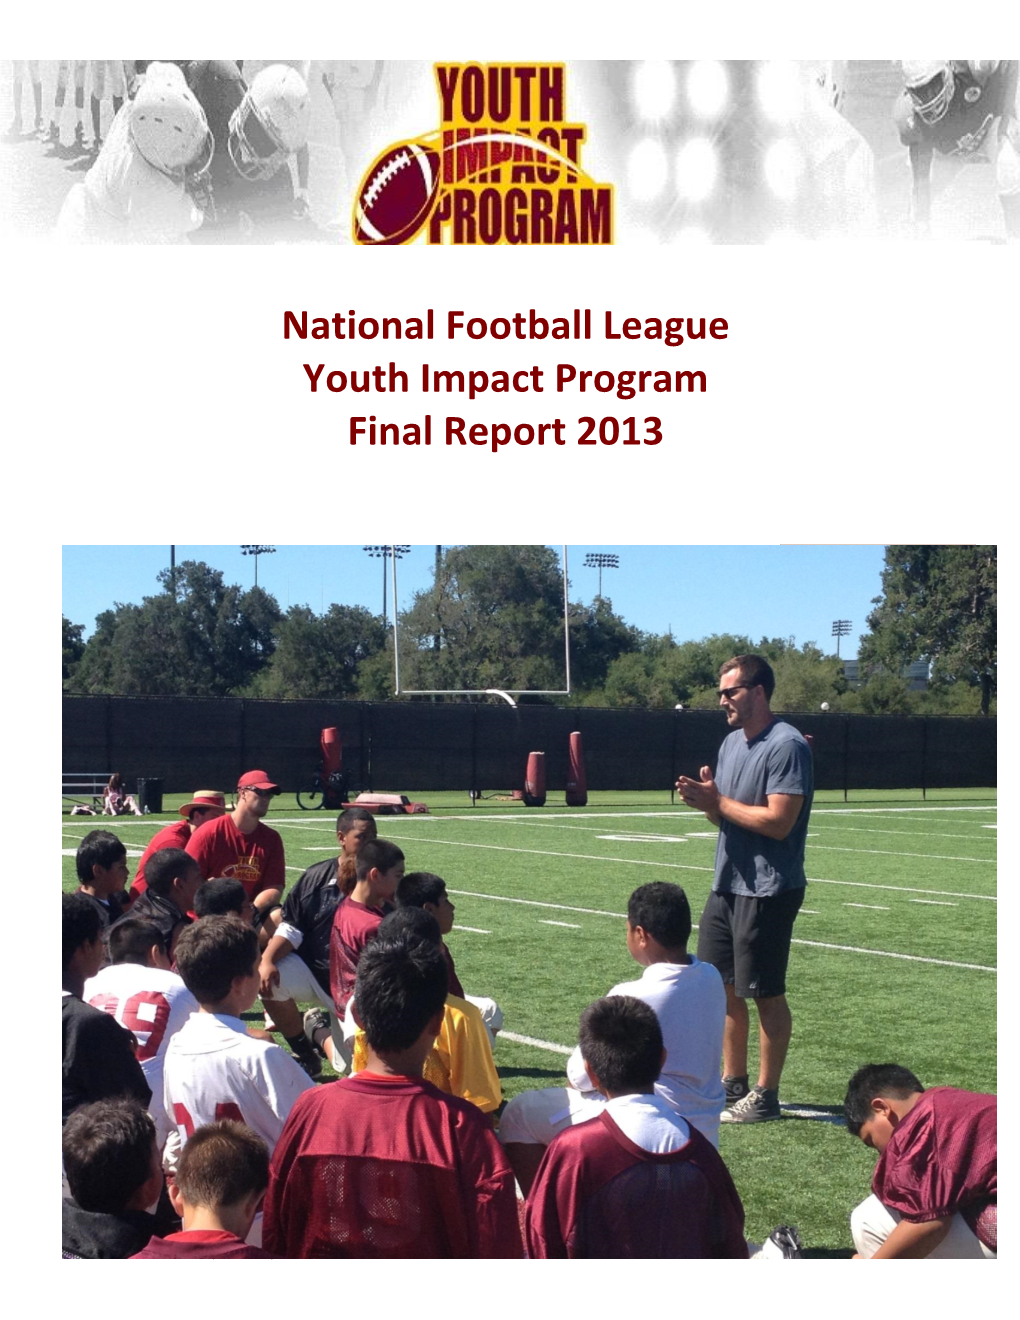 National Football League Youth Impact Program Final Report 2013